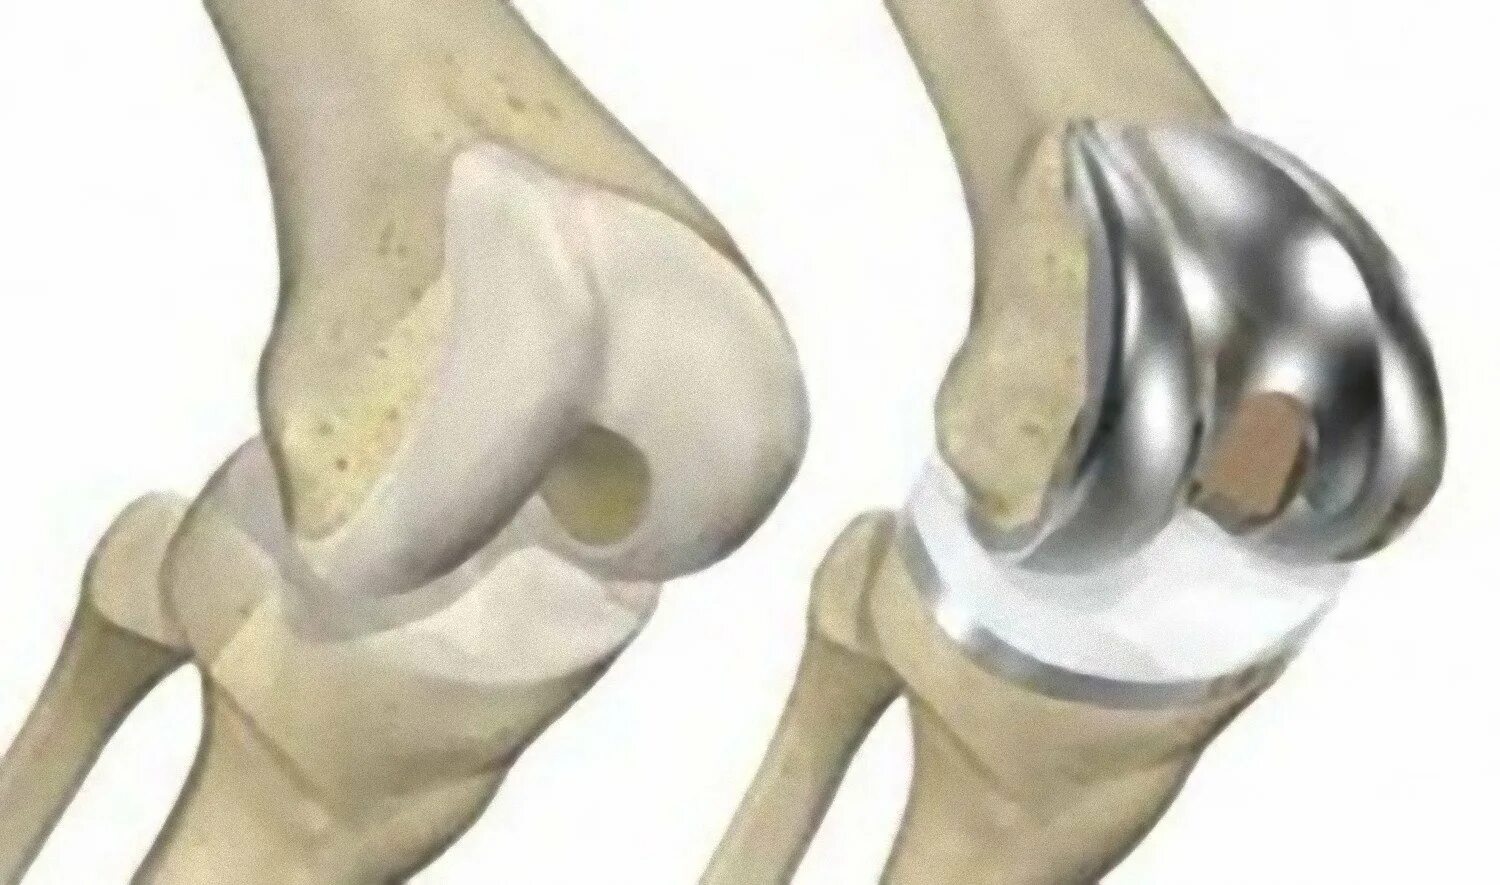 Ростов замена коленного сустава. Артропластика коленного сустава. Maxx Orthopedic эндопротез коленного. Артропластика тазобедренного сустава. Тотальное эндопротезирование коленного сустава.